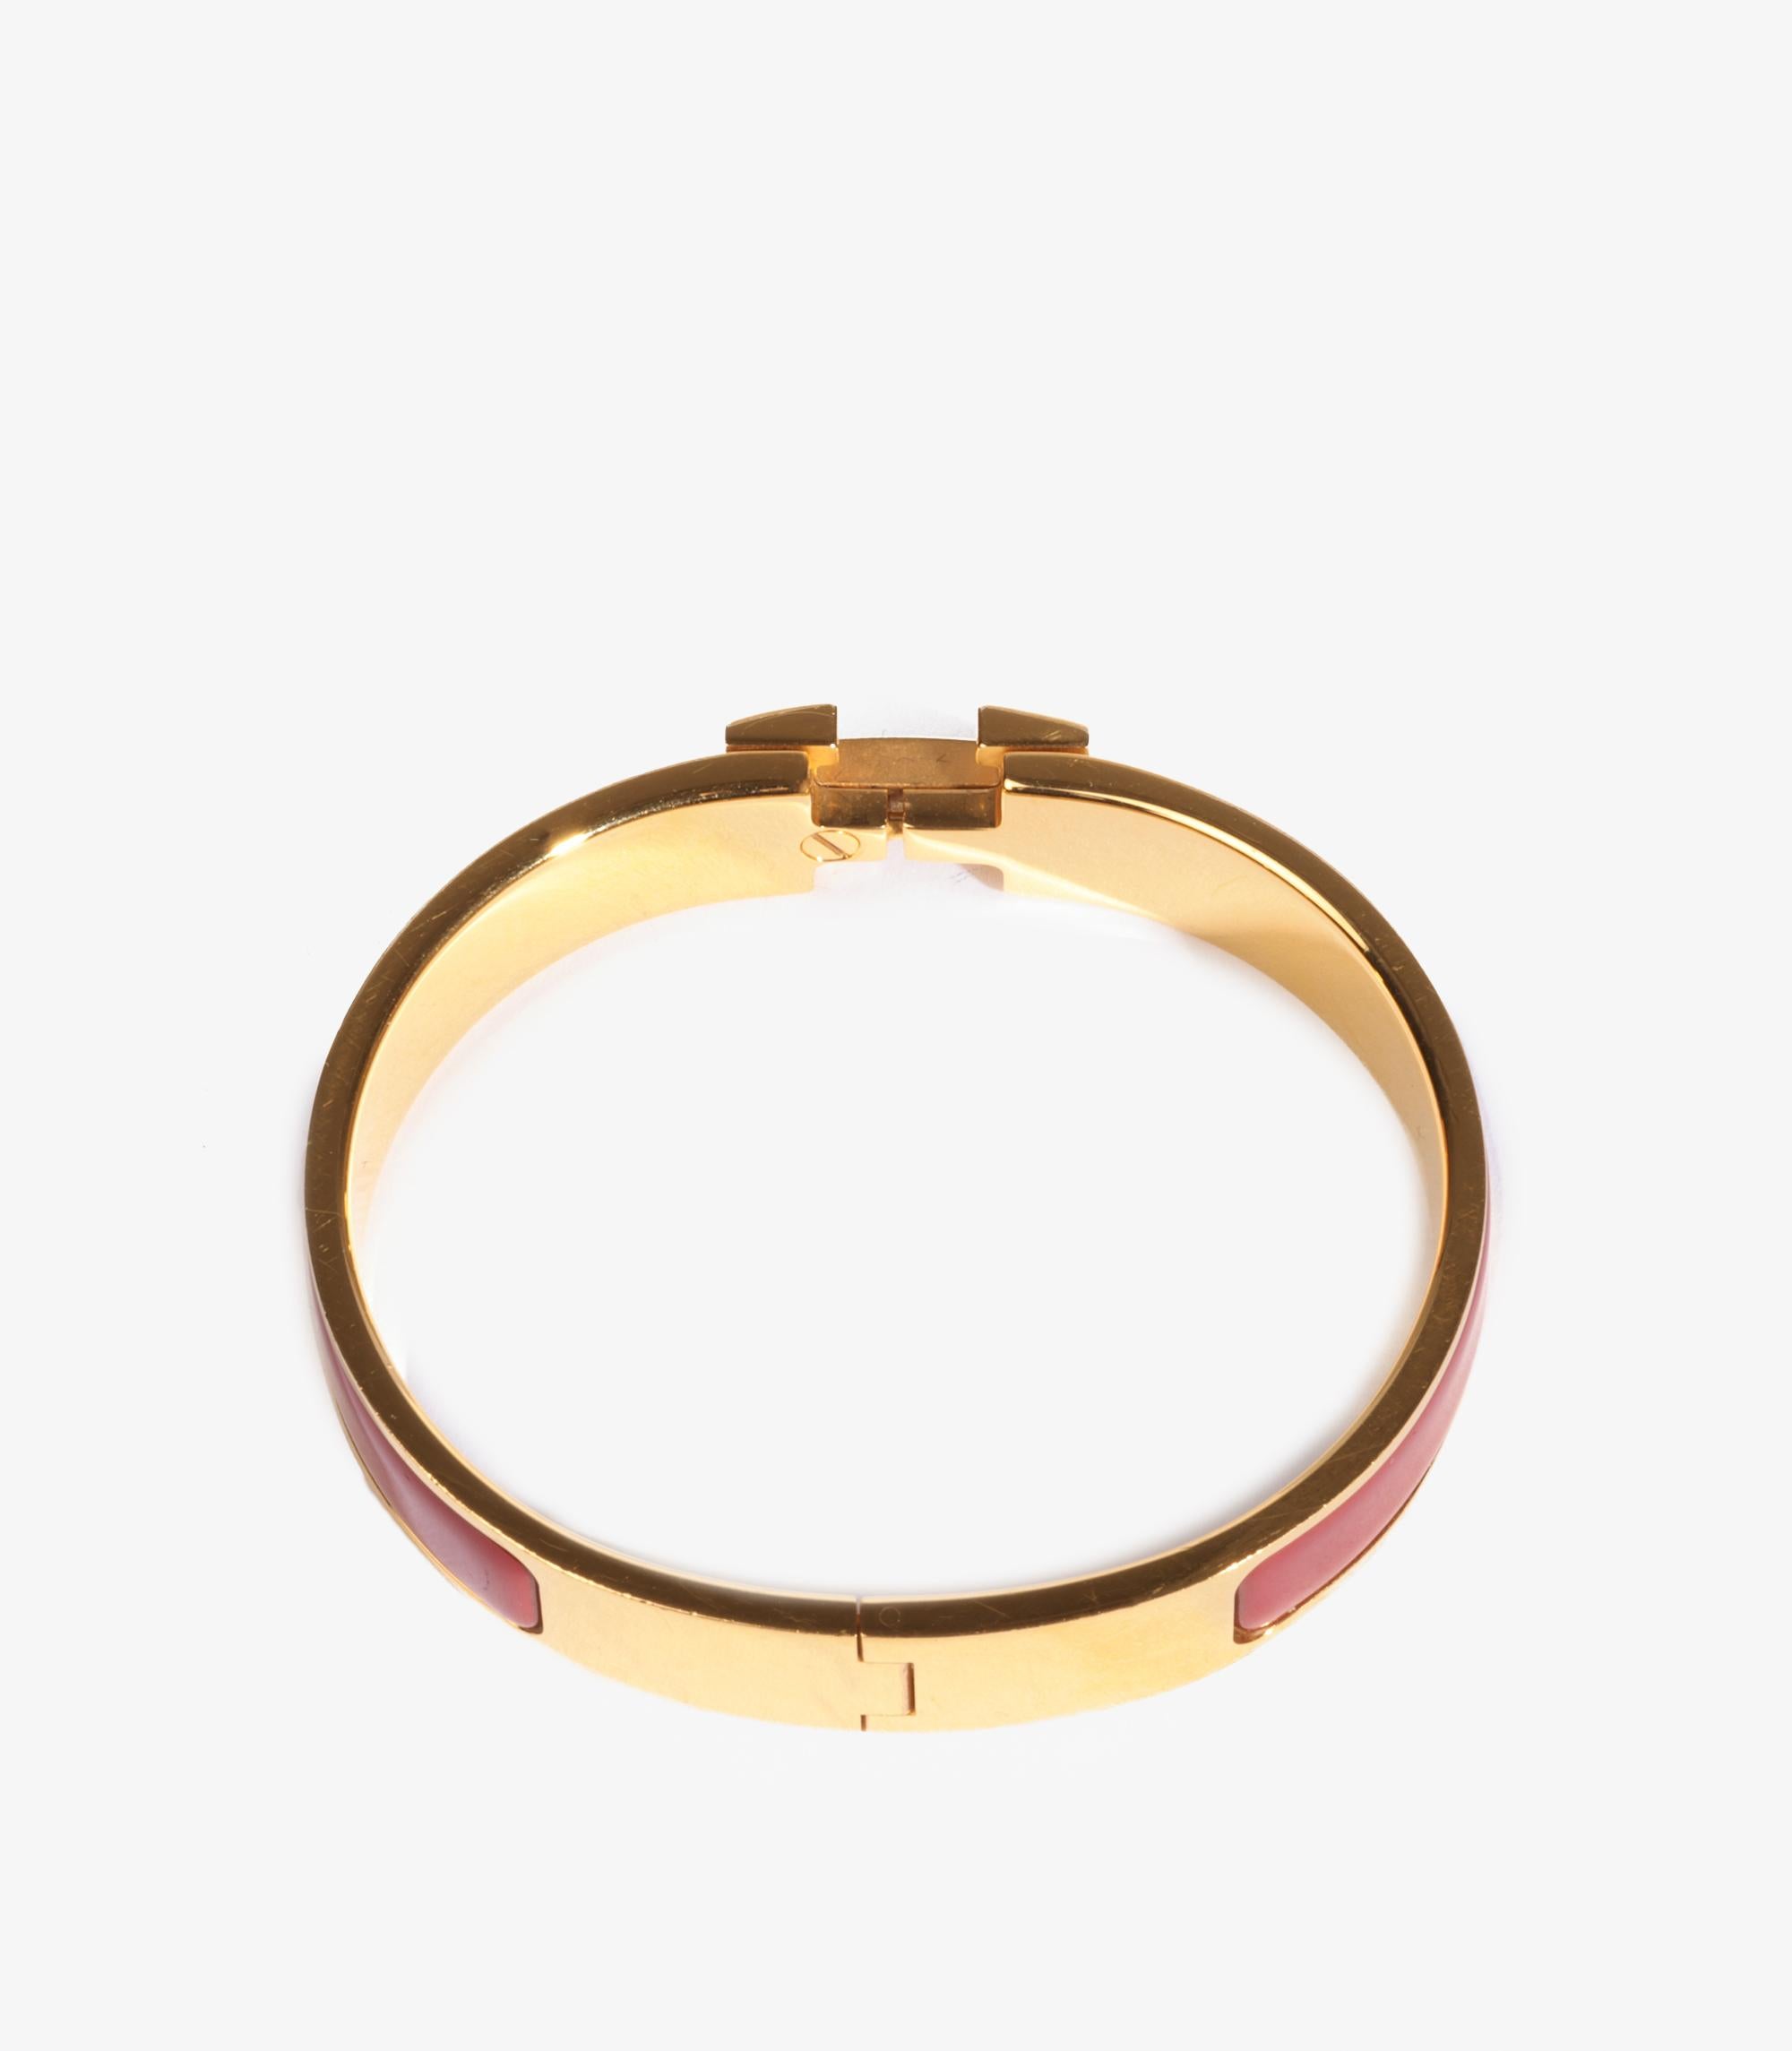 red and gold hermes bracelet